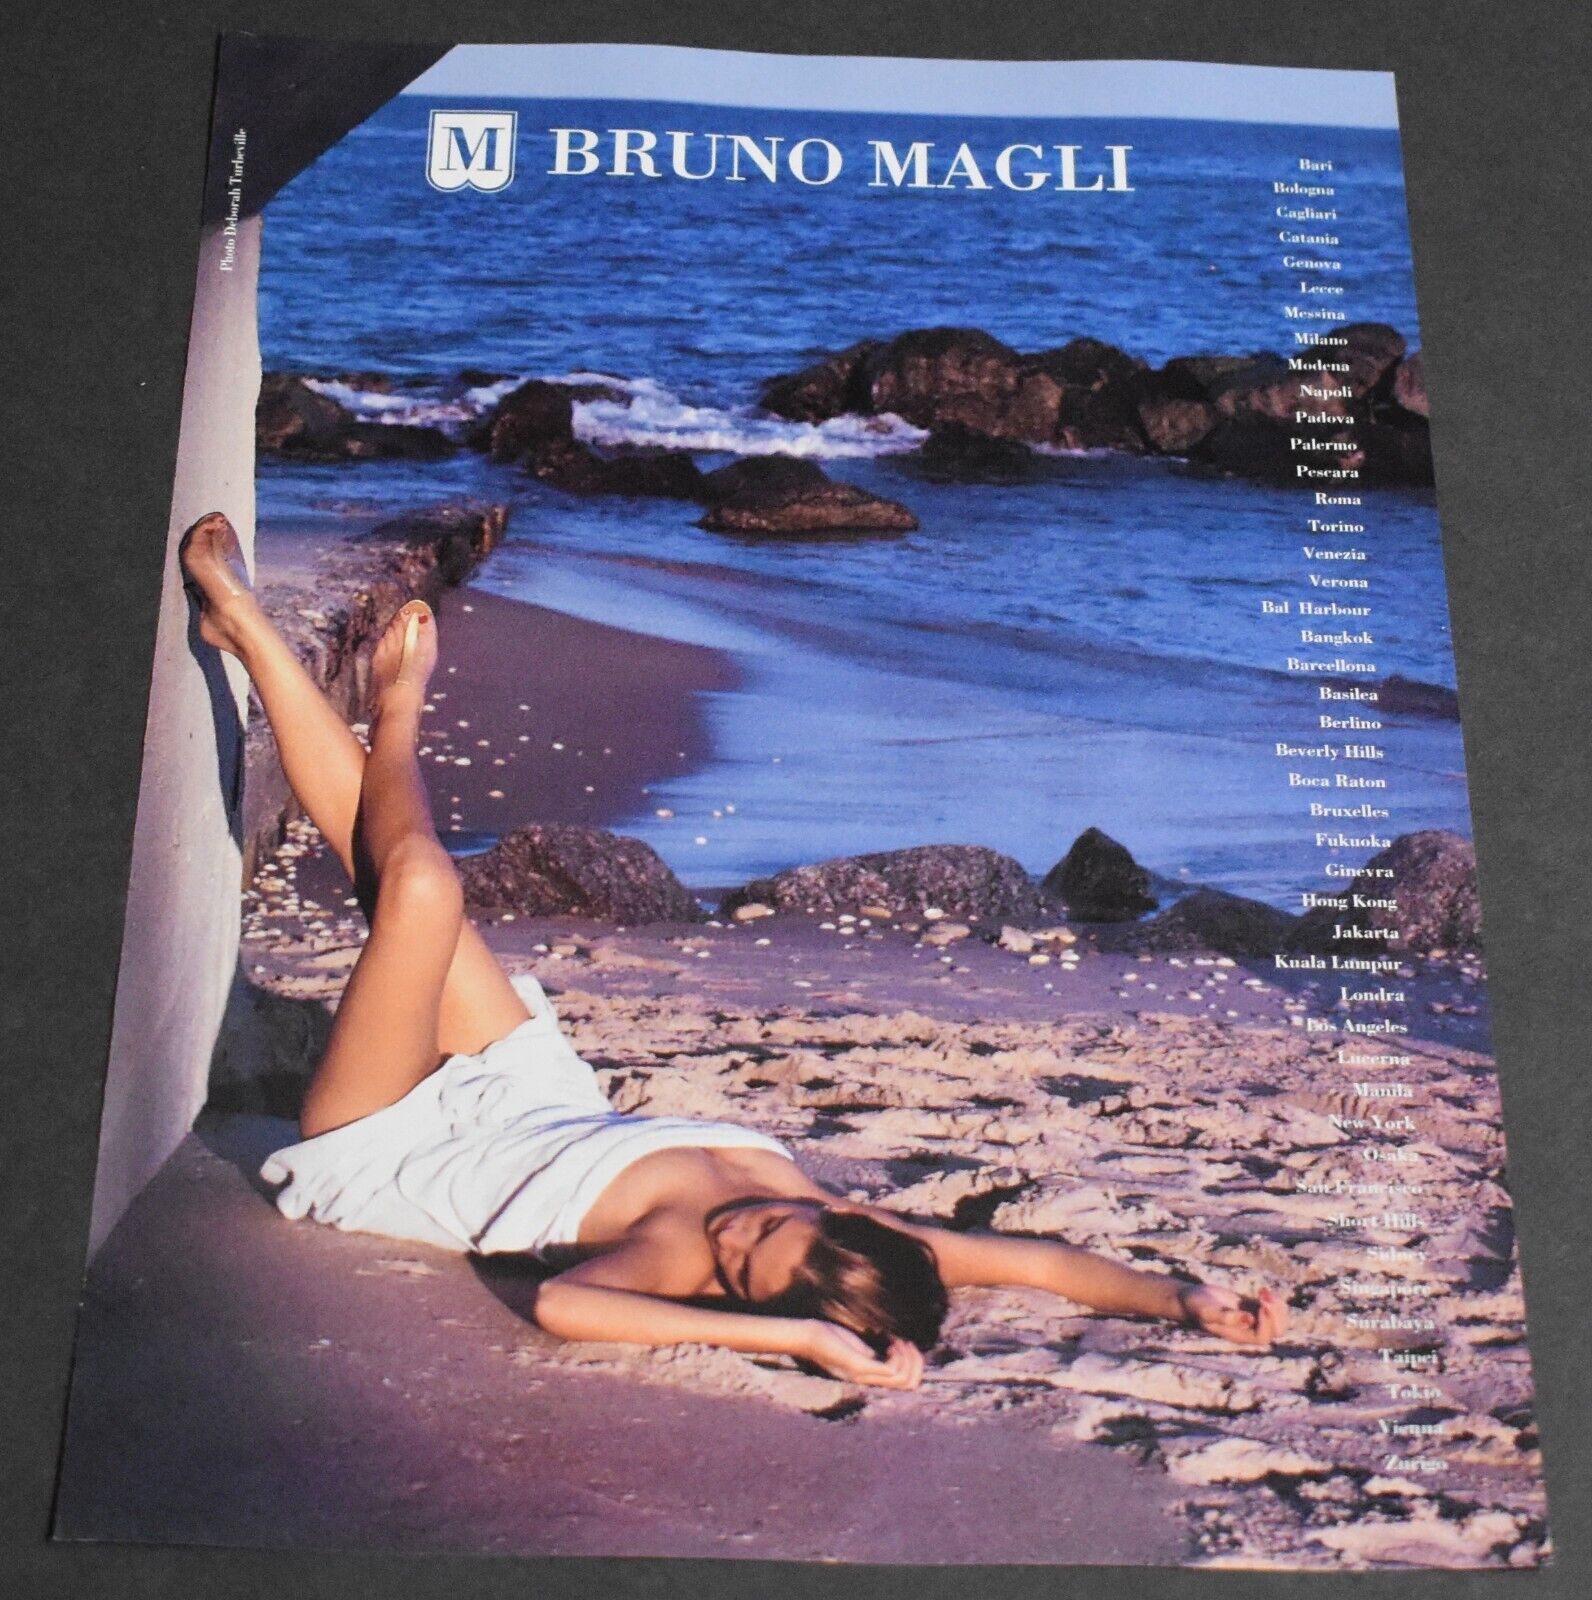 1995 Print Ad Heels Fashion Style Lady Long Legs Sexy Bruno Magli Beach Blonde